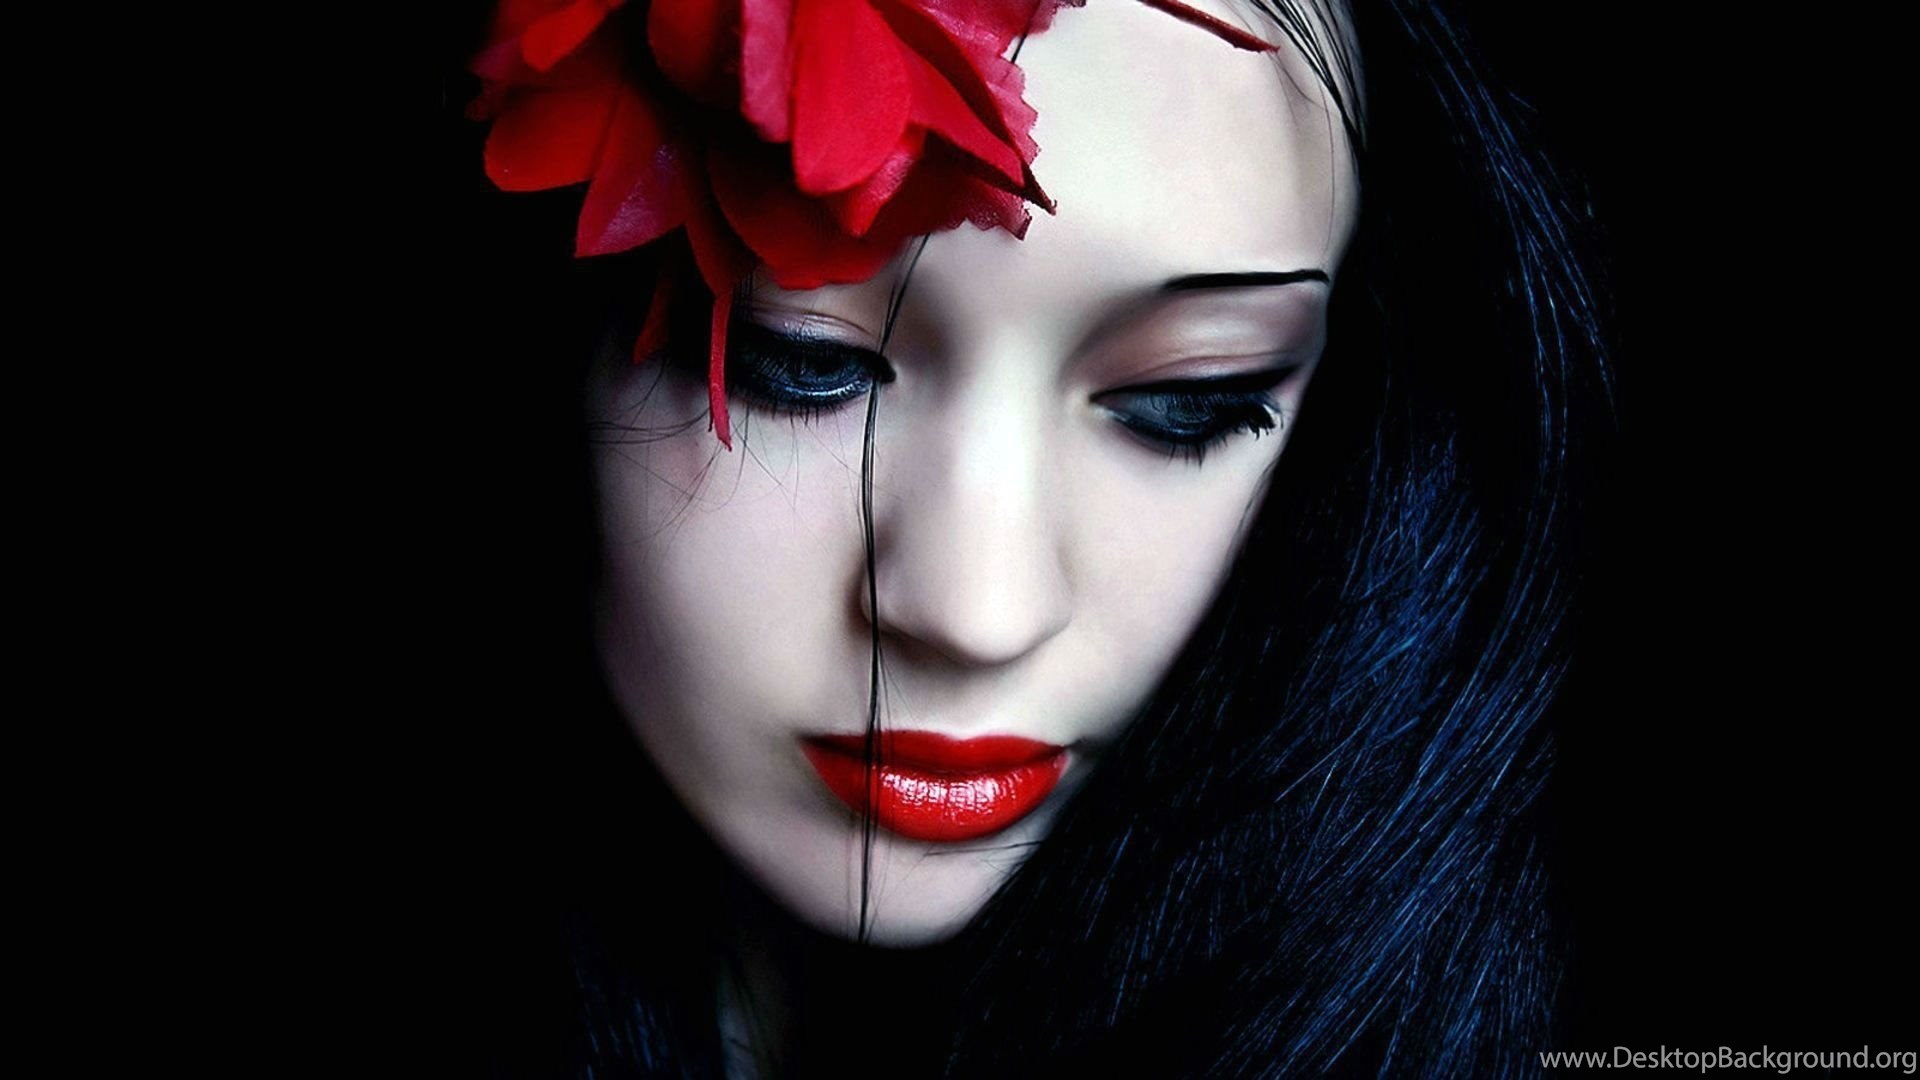 Dark Horror Fantasy Gothic Women Blood Vampire Wallpaper. Desktop Background